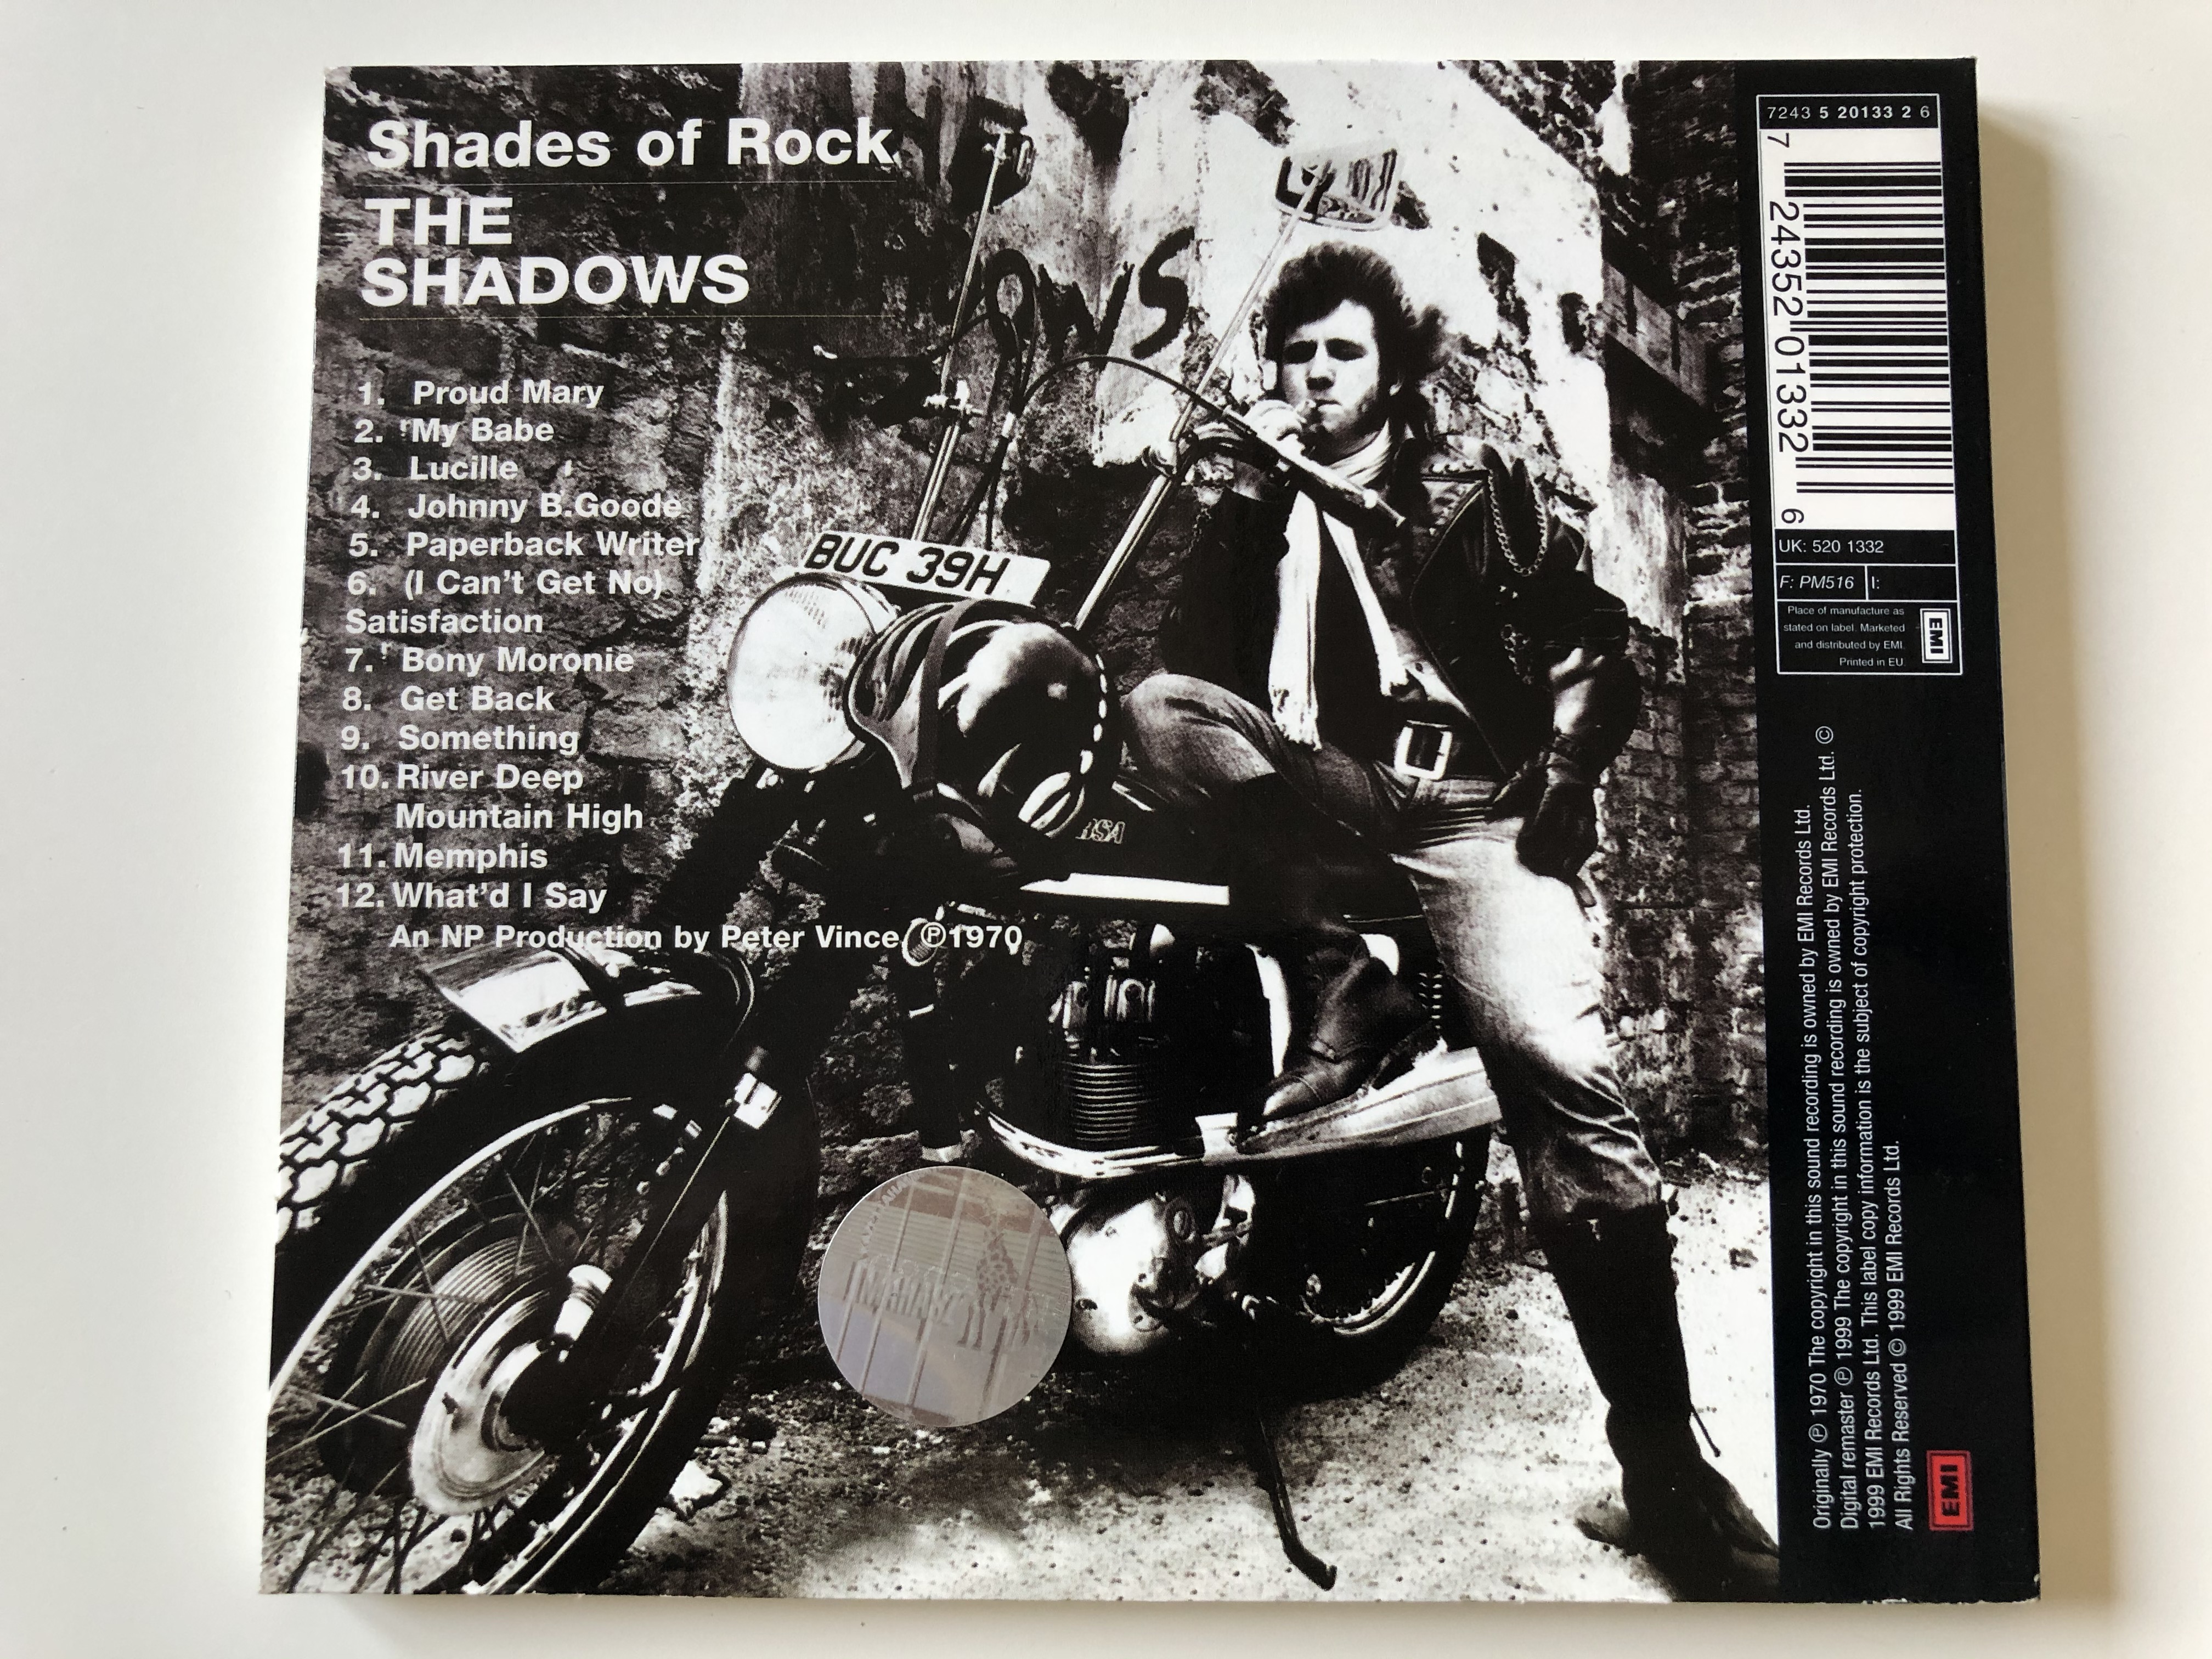 shades-of-rock-the-shadows-emi-audio-cd-1999-stereo-724352013326-4-.jpg